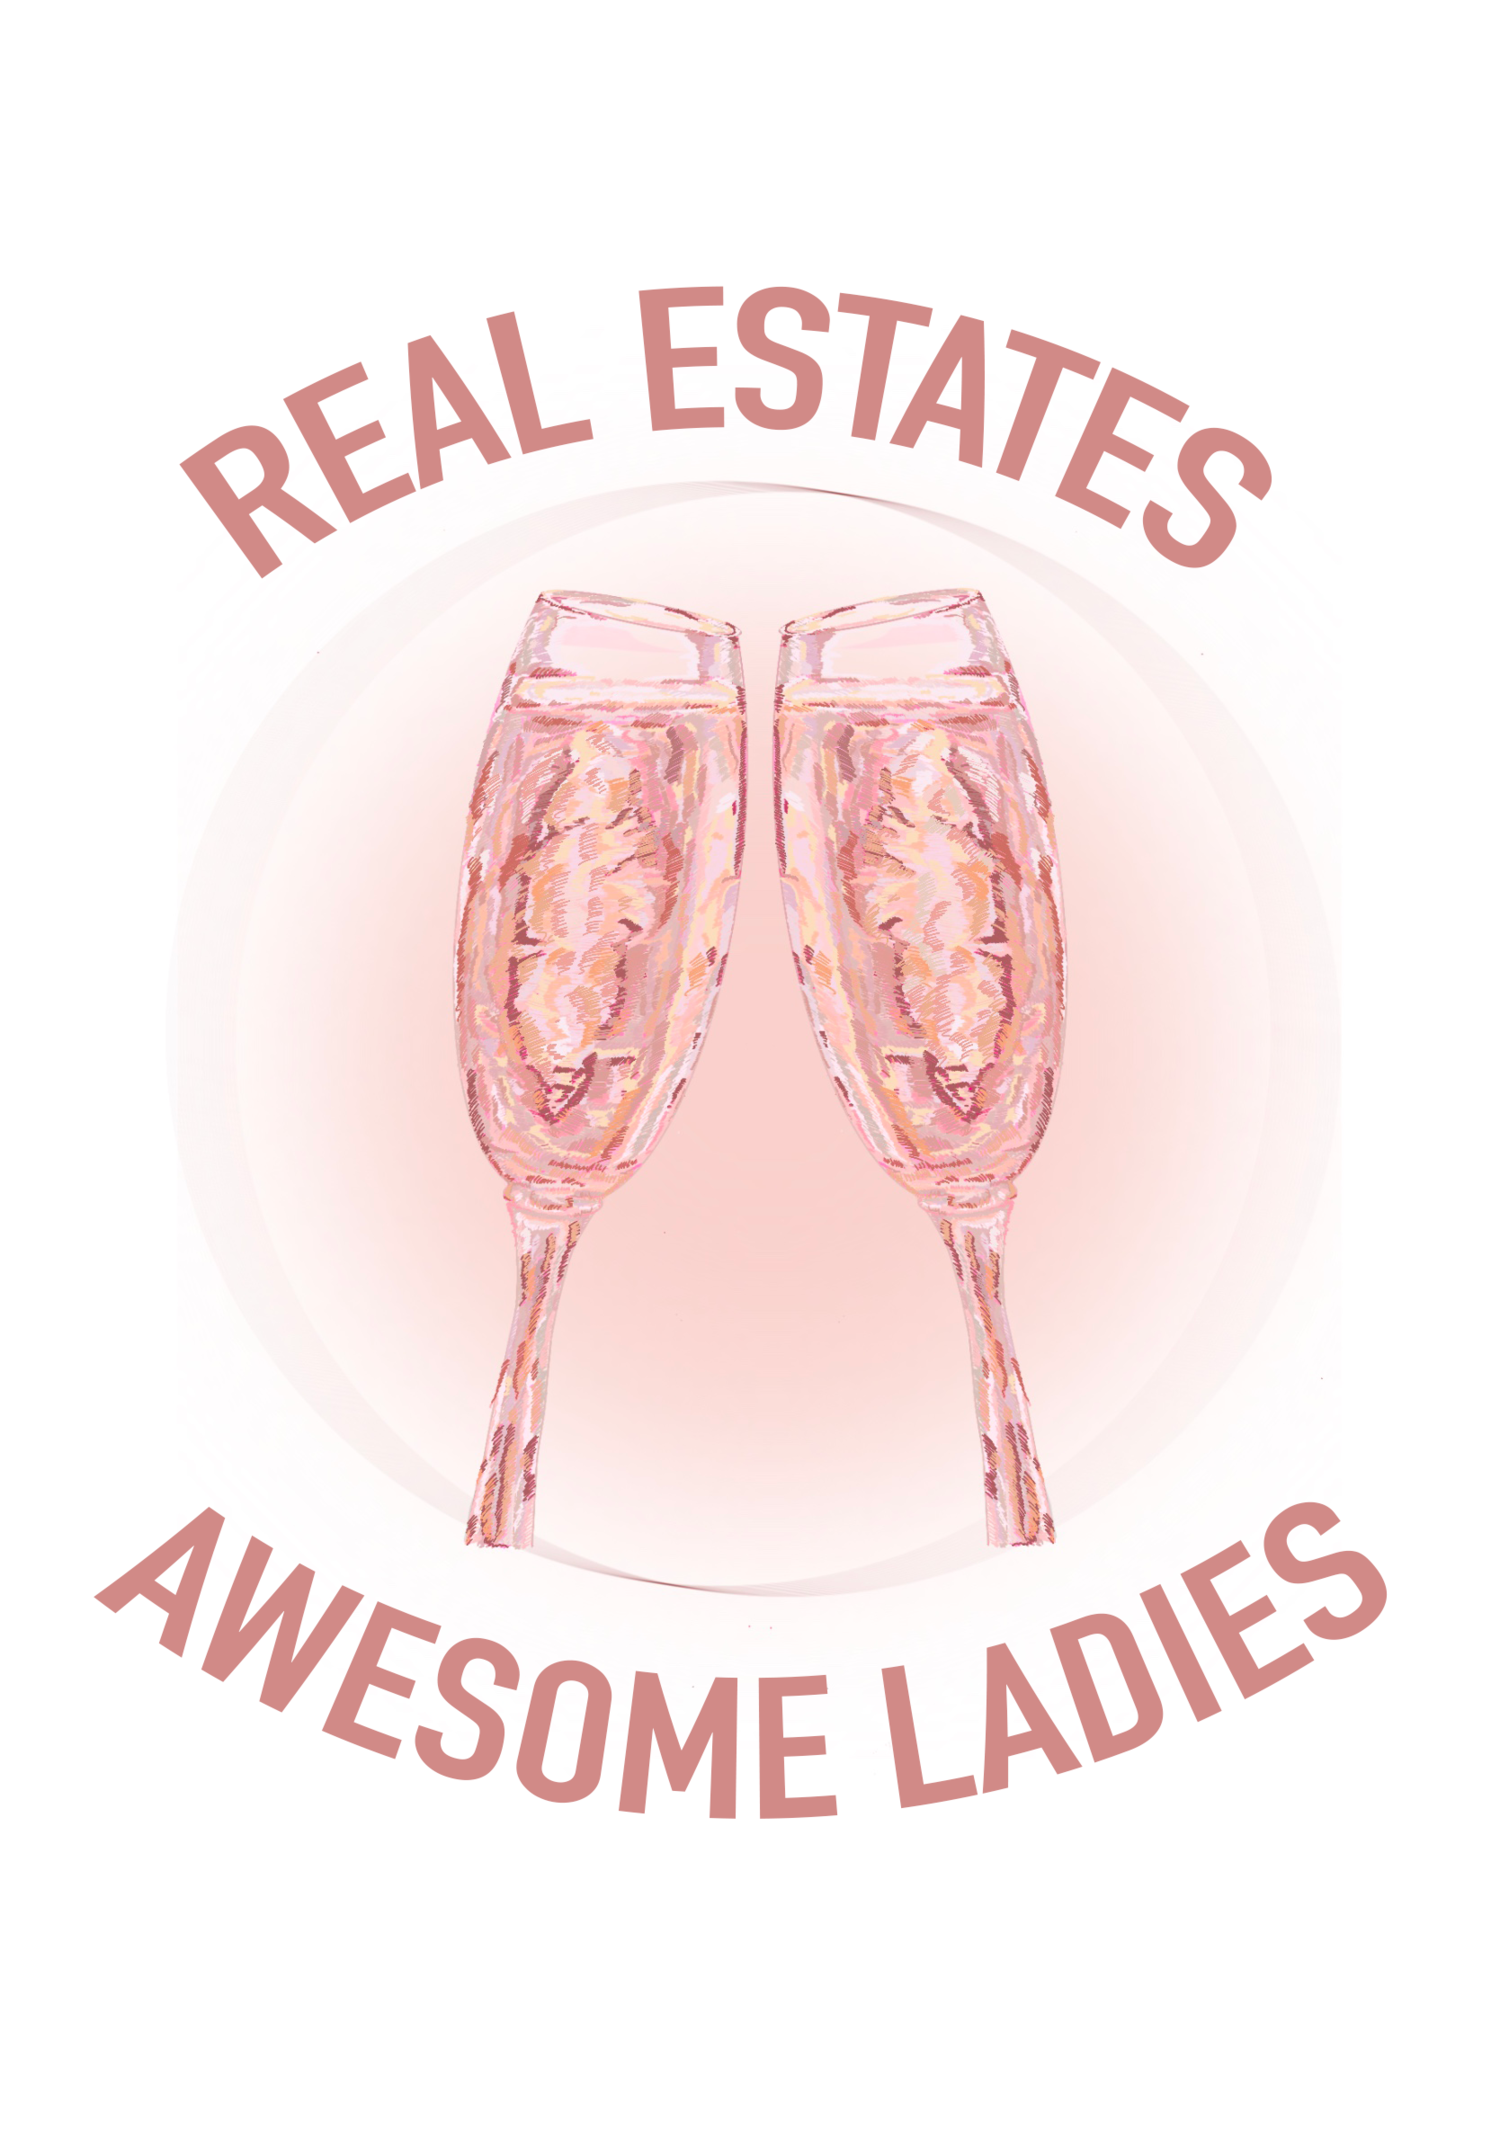 Real Estates Awesome Ladies